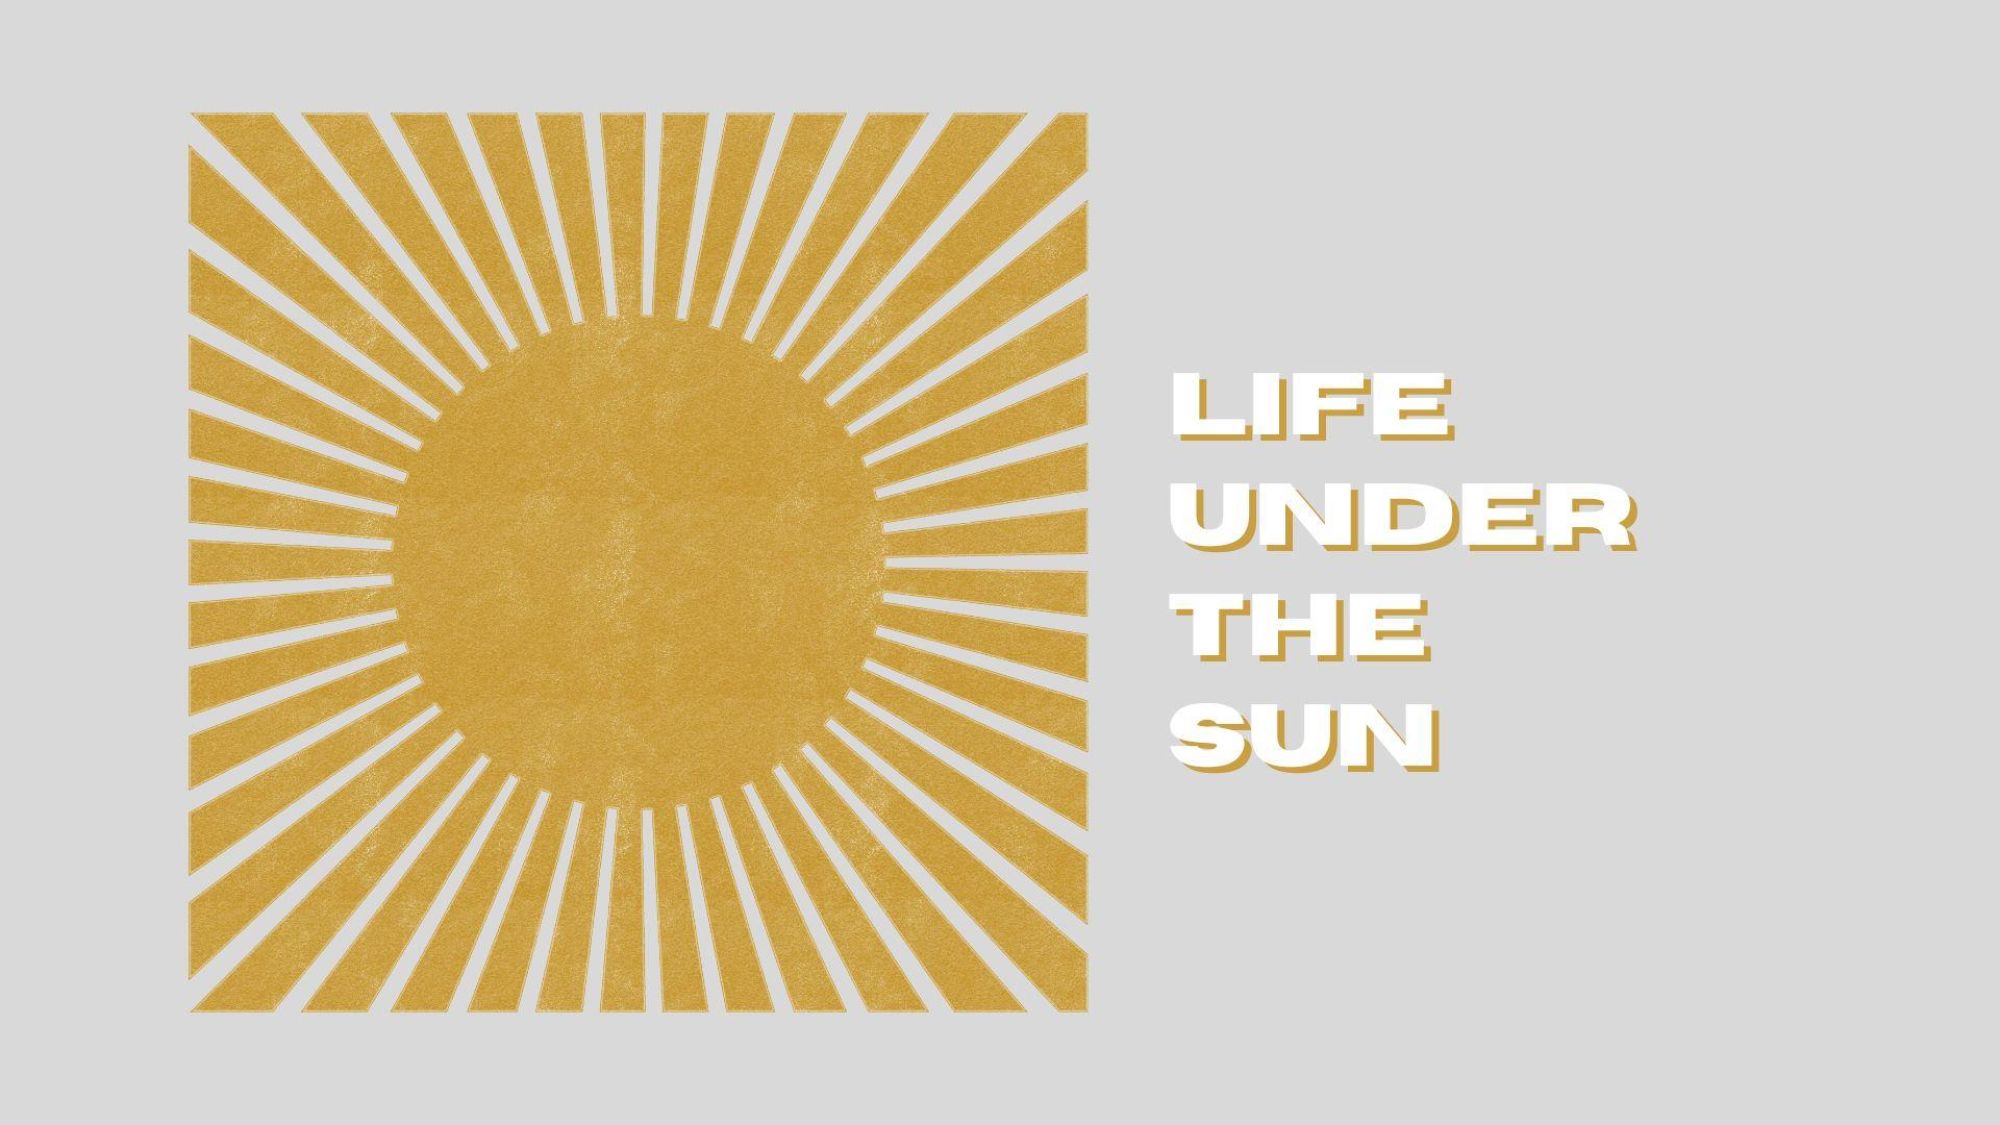 Life Under the Sun